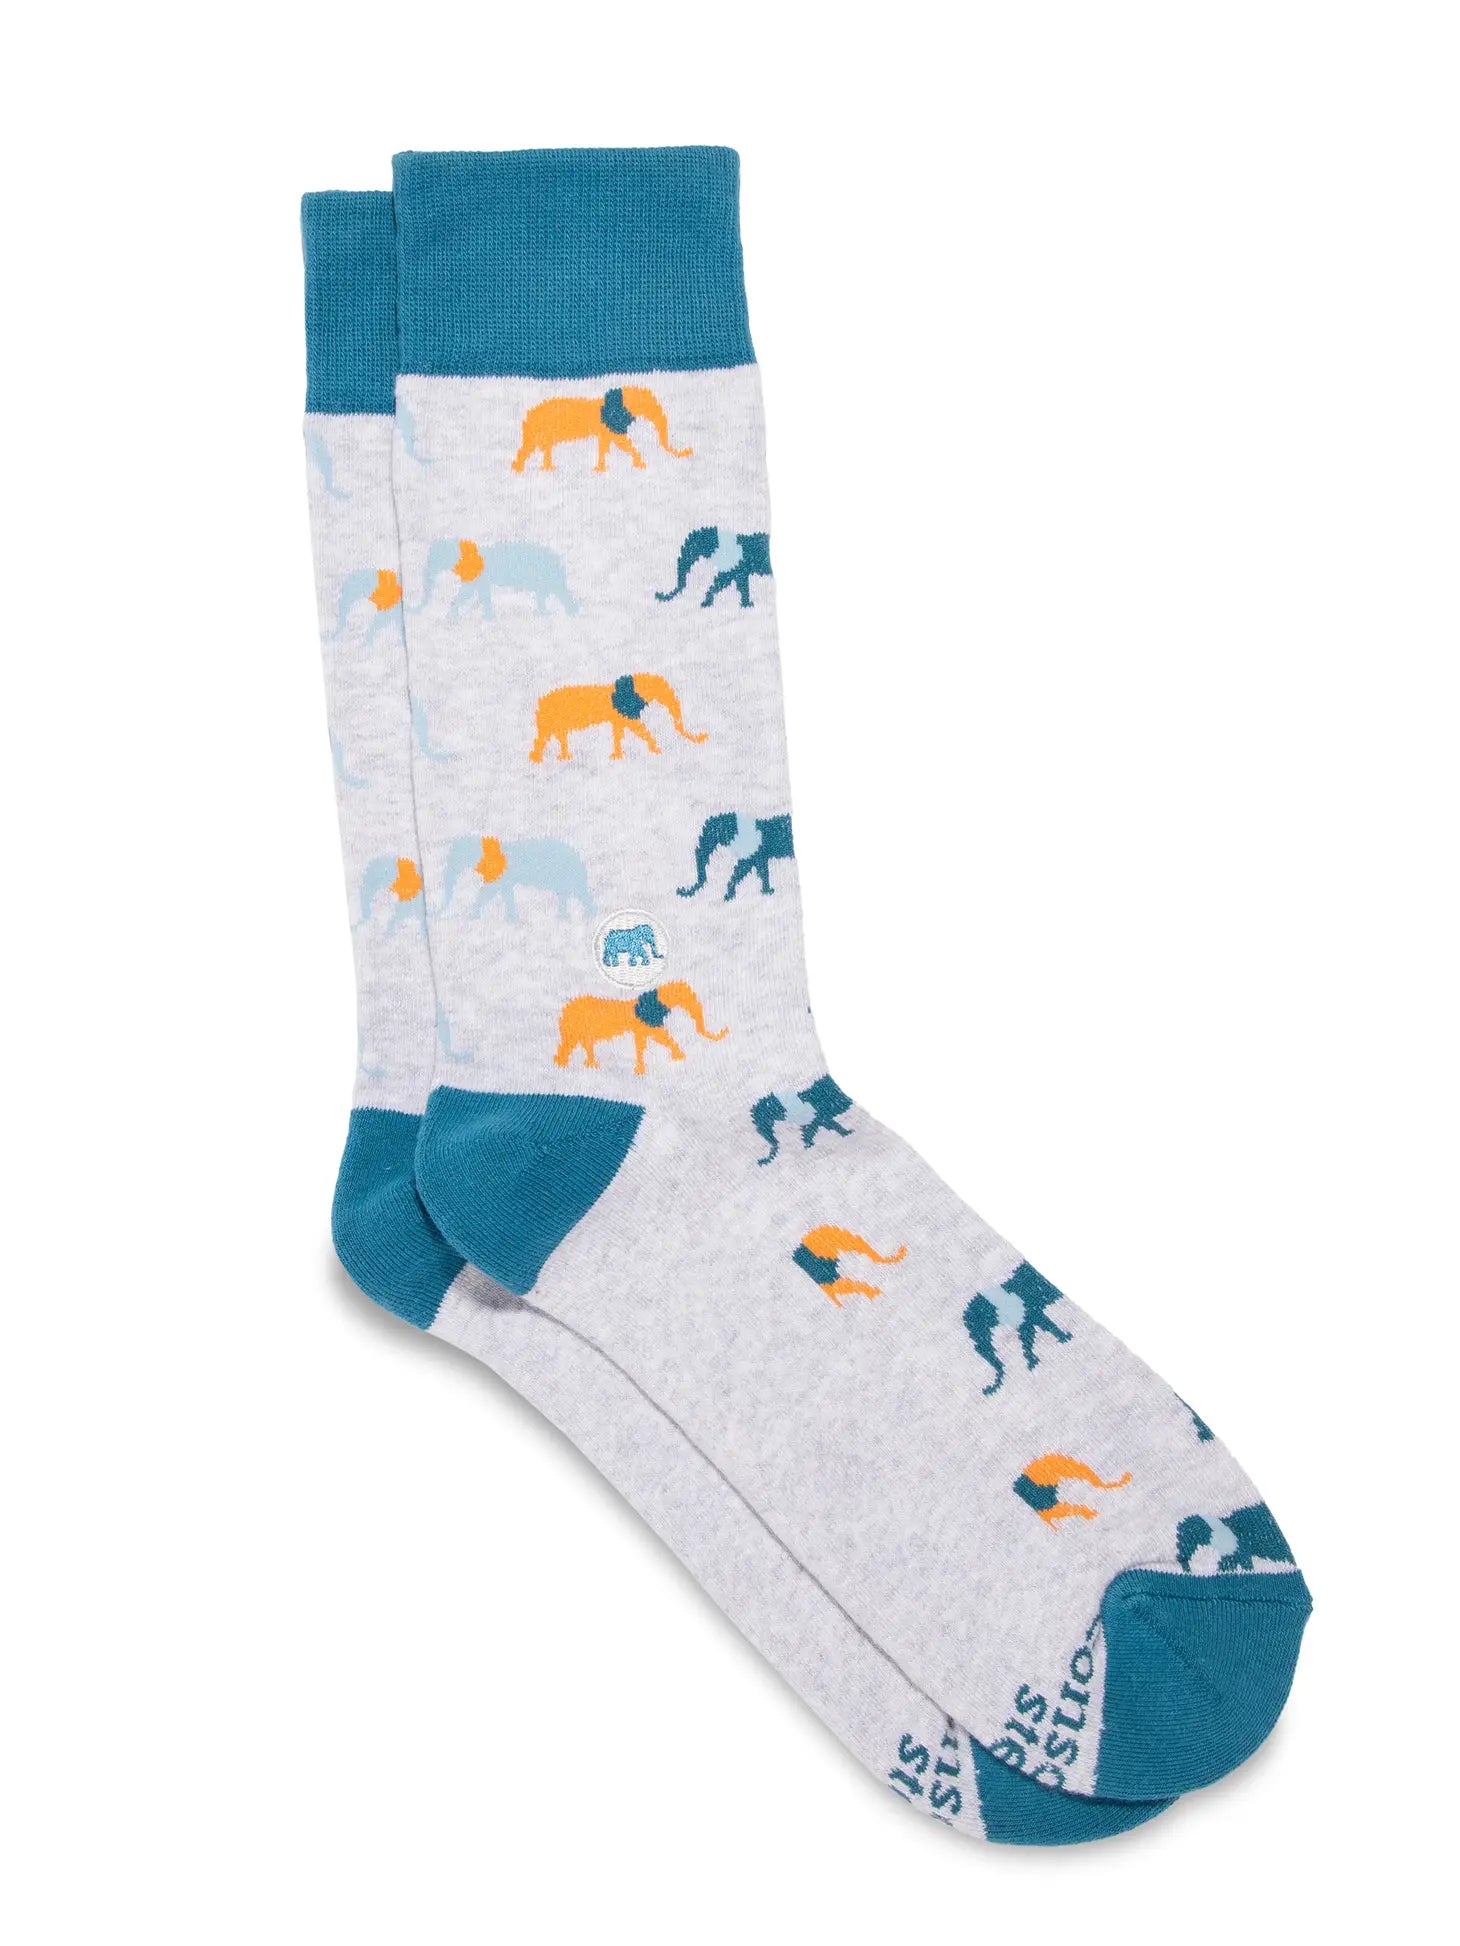 Socks - Protect Elephants